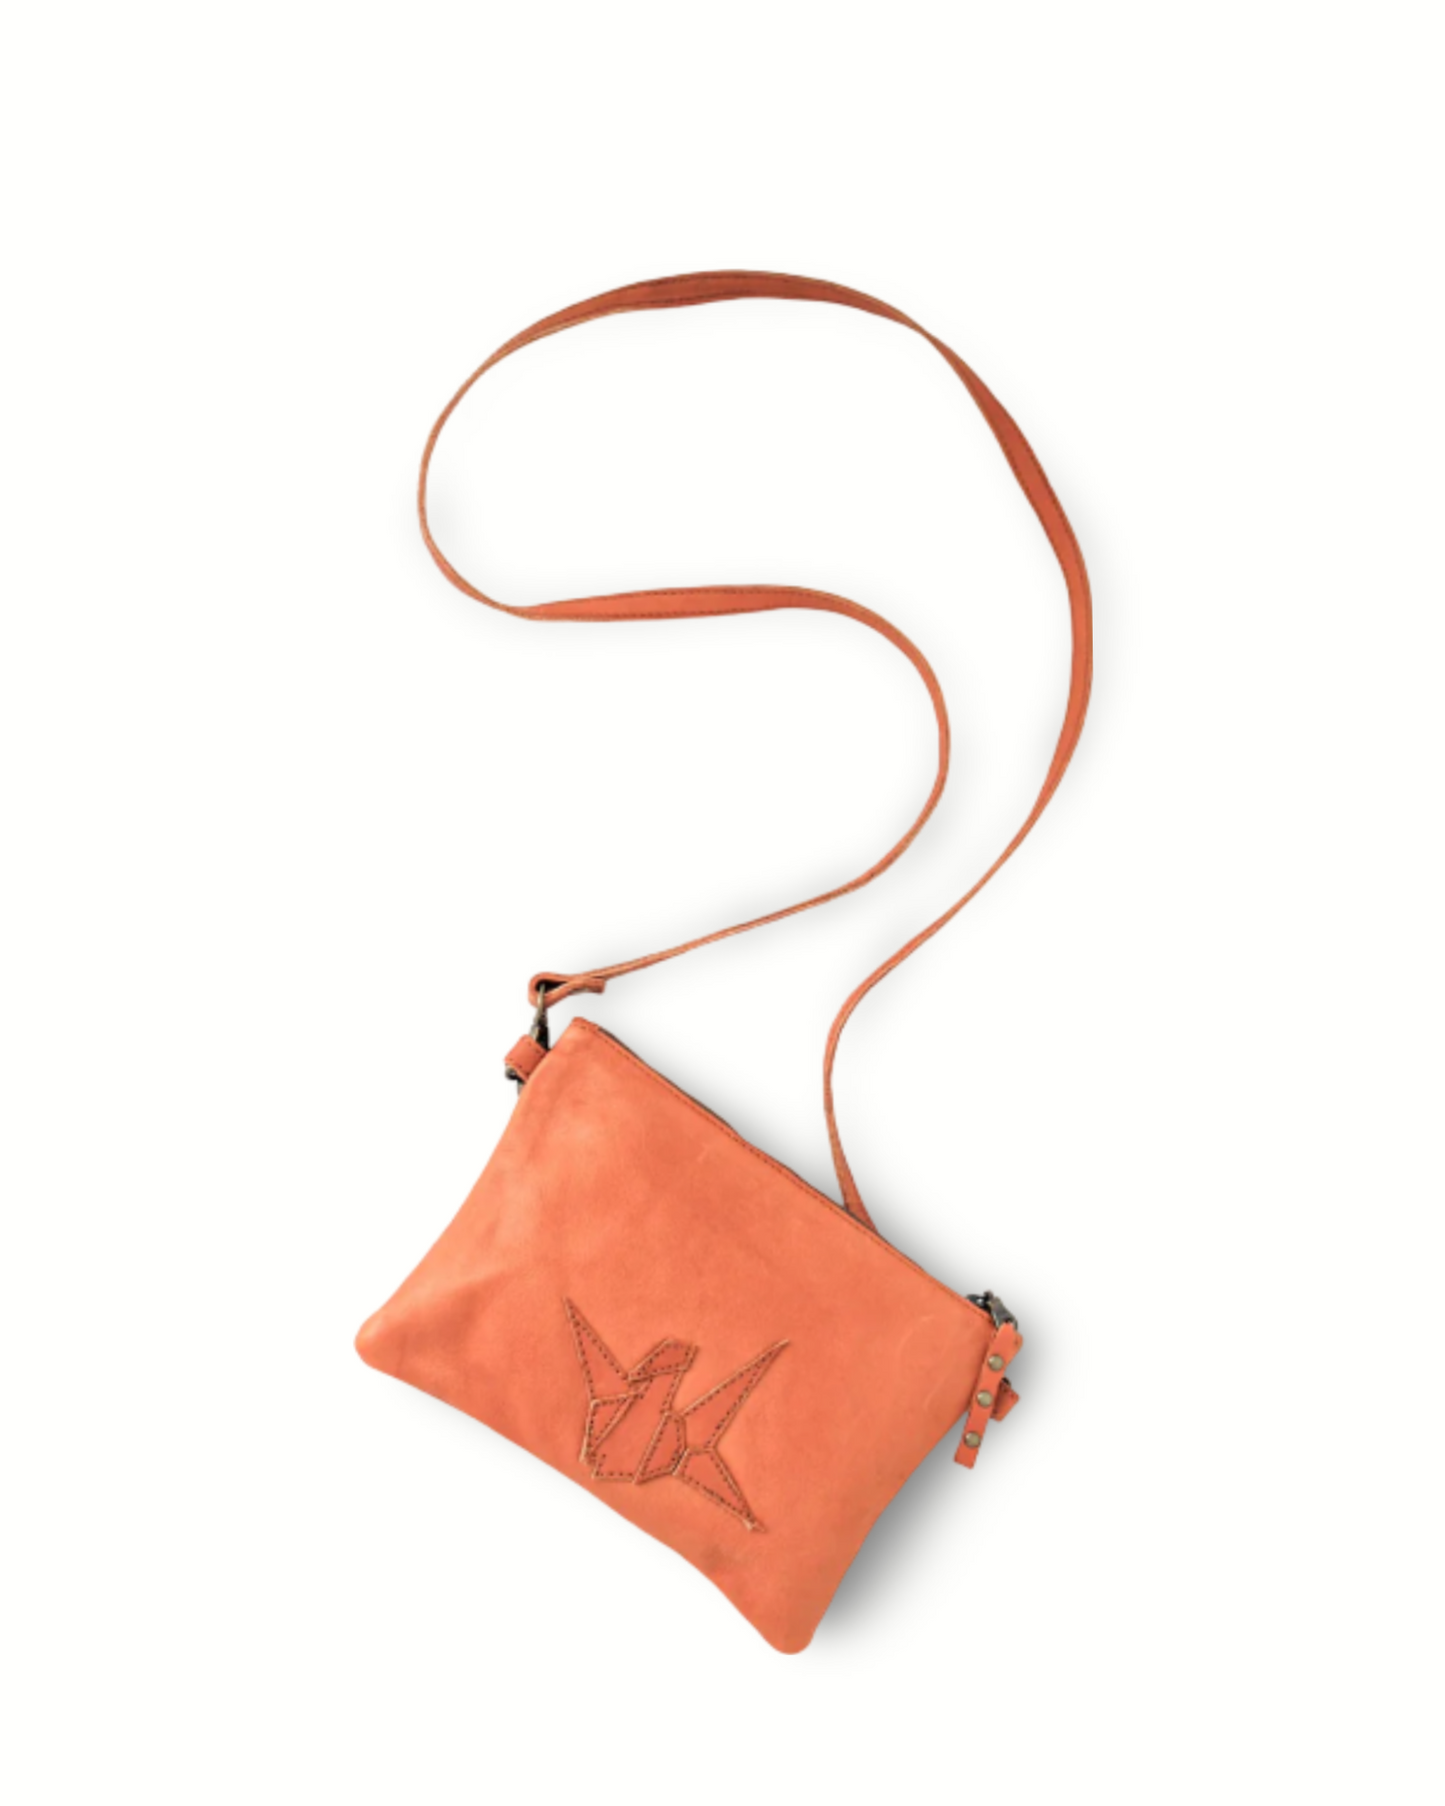 Origami Crane Inspired Leather Purse Small Crossbody Bag - ORIEN VIN TIQUE